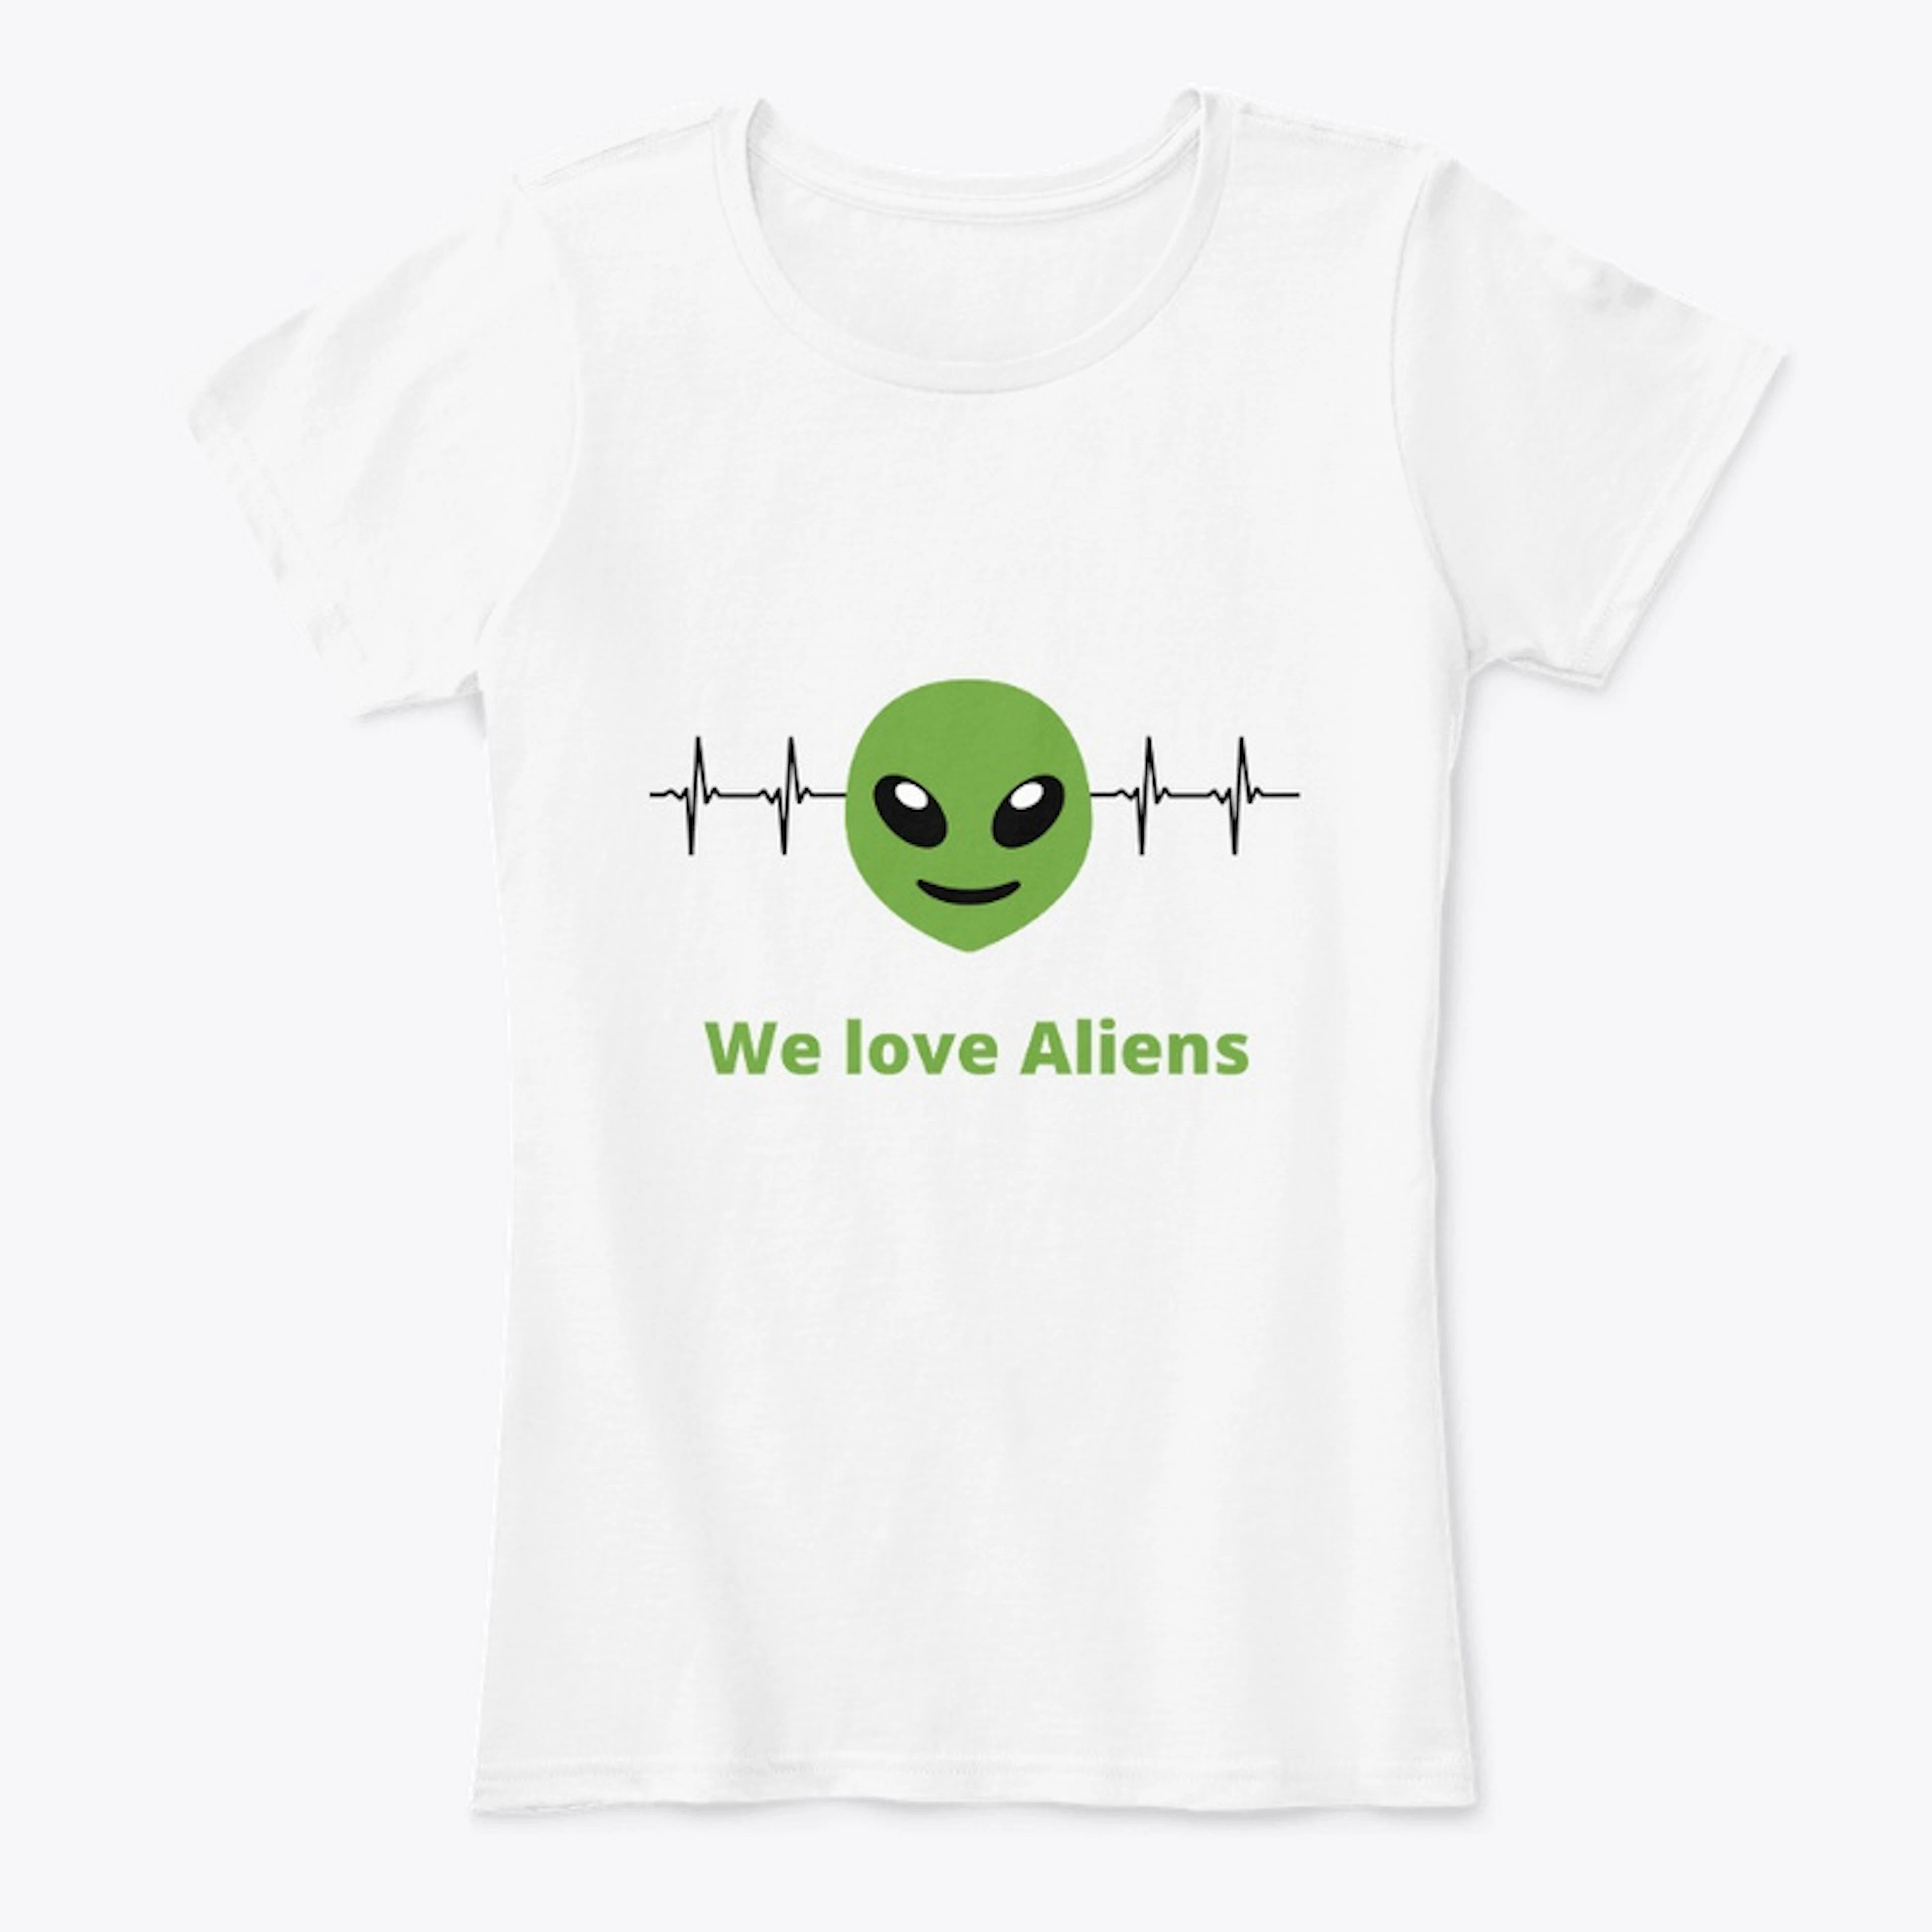 We love Aliens